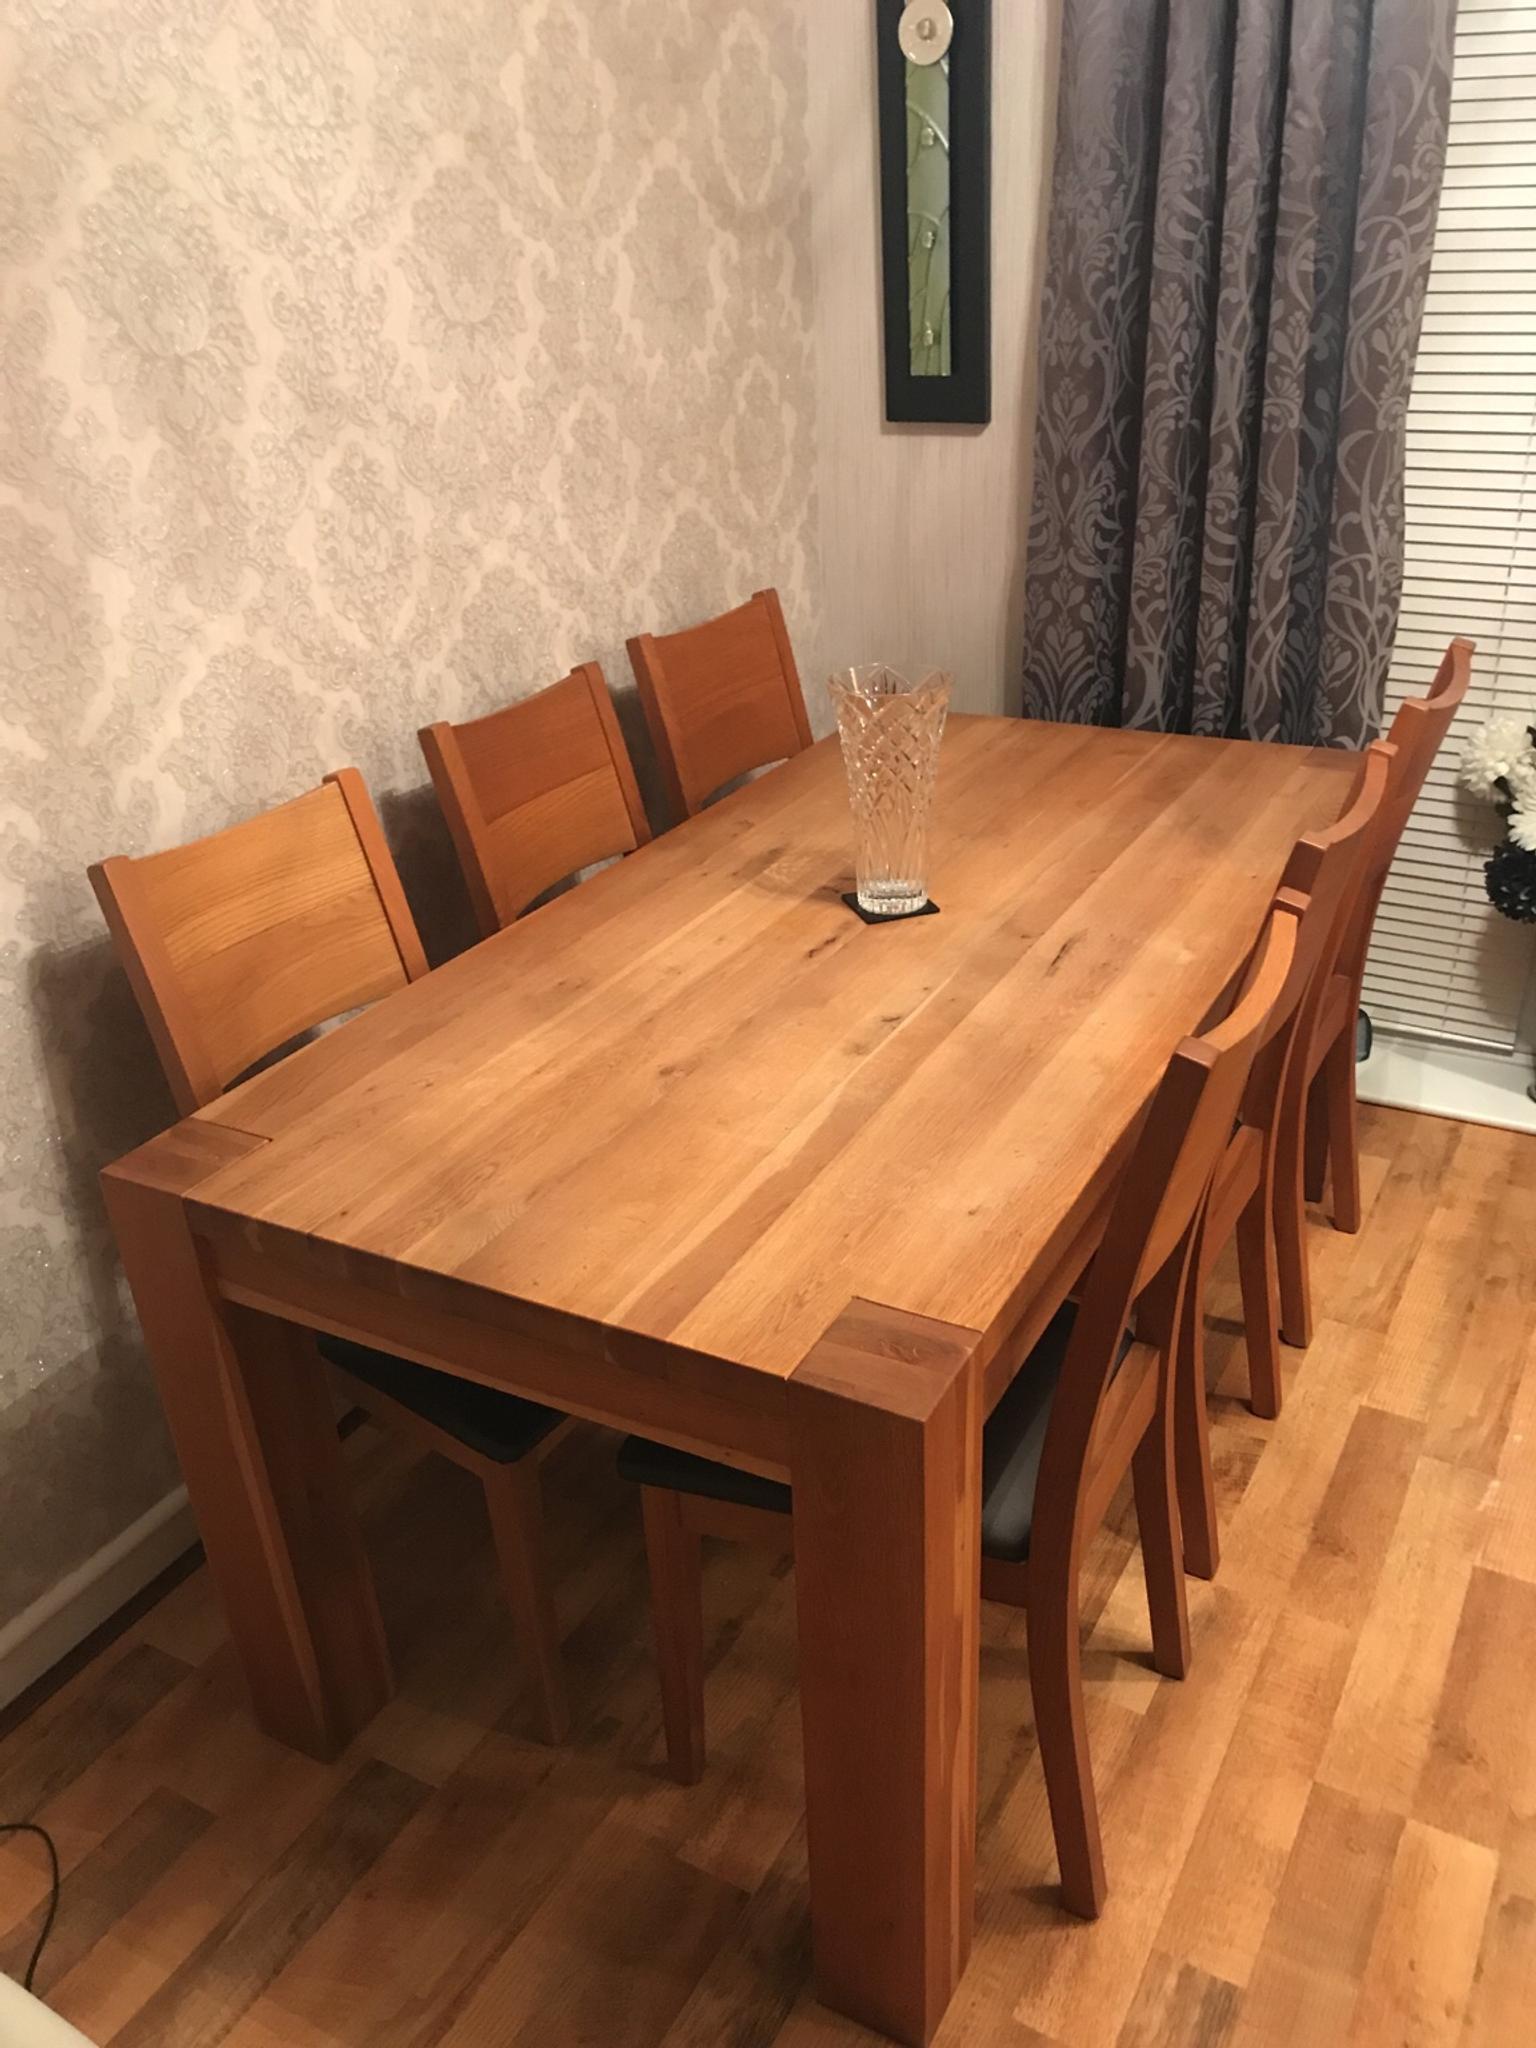 Solid Wood Dining Table 6 Chairs In Ol8 Oldham Fur 300 00 Zum Verkauf Shpock De